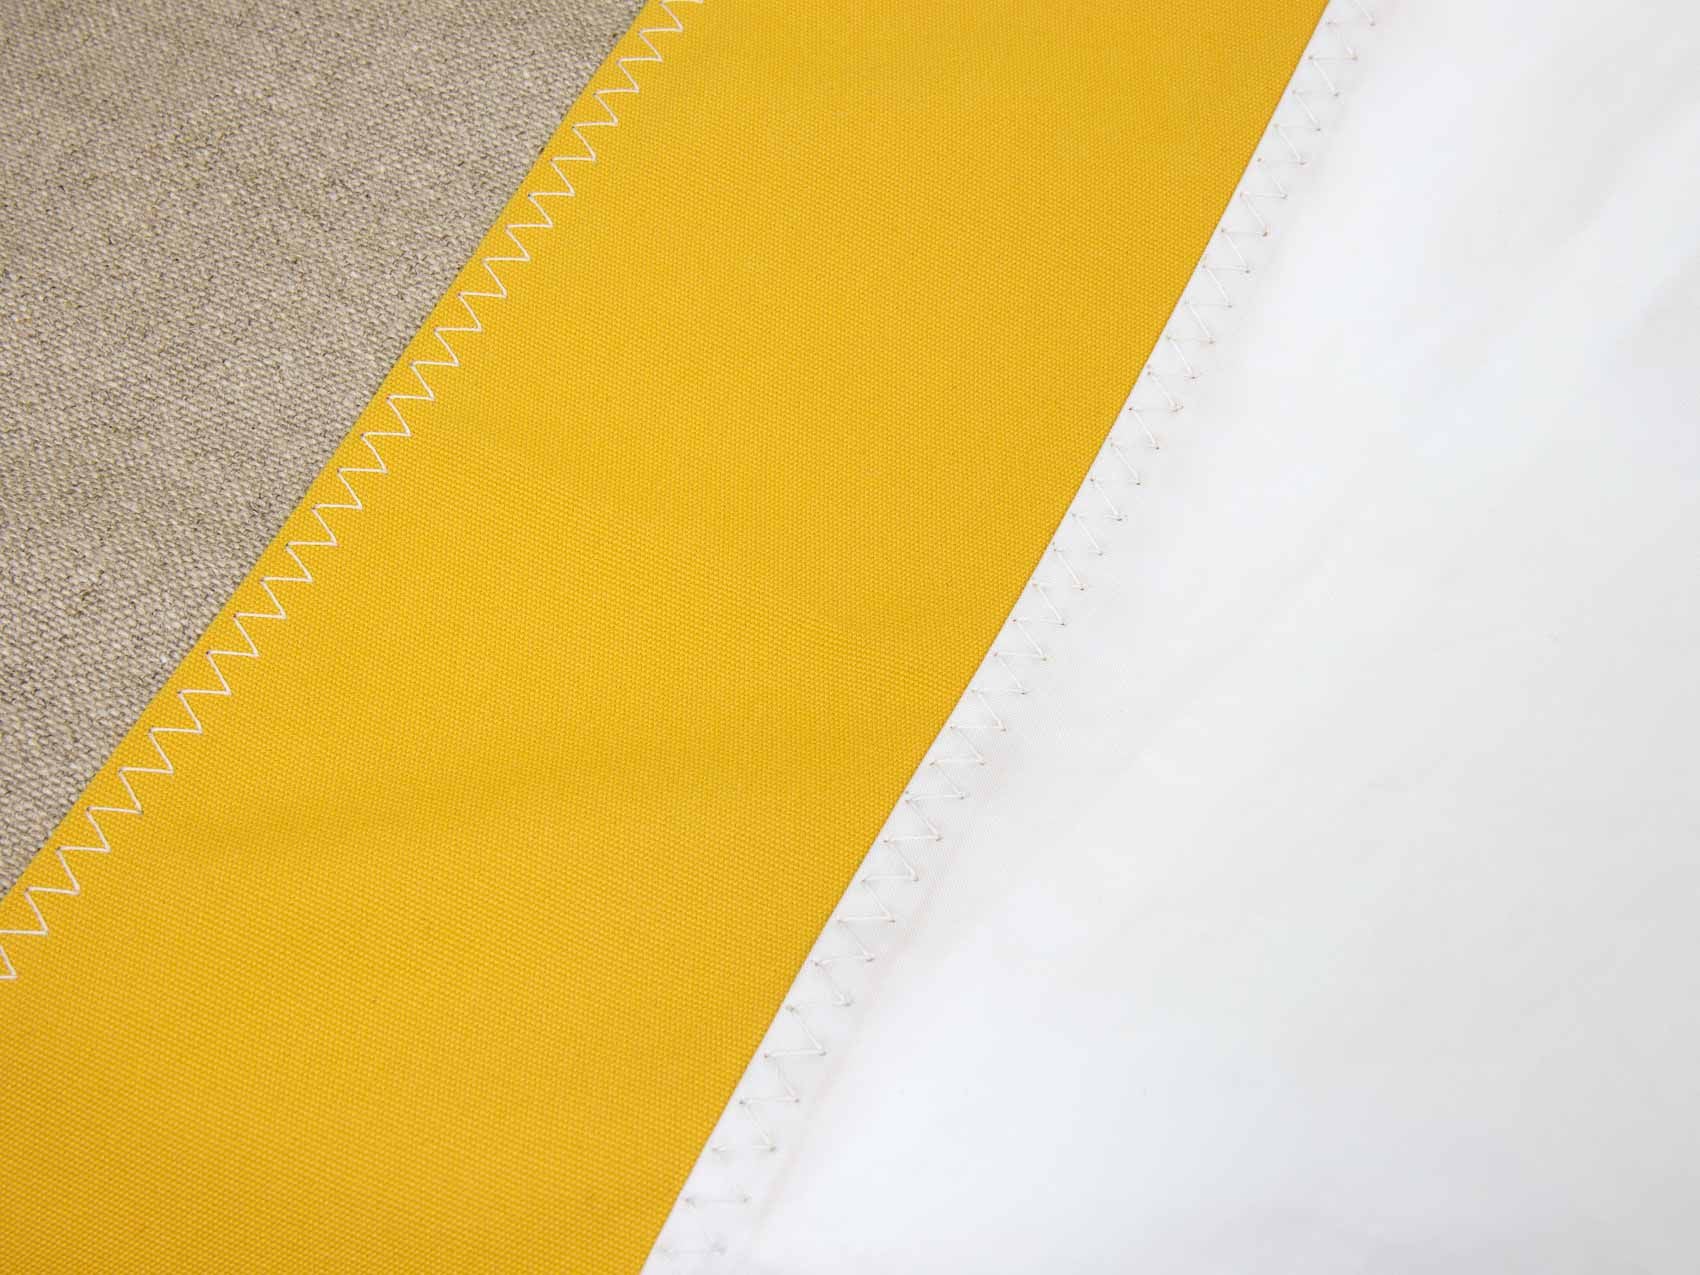 727 Sailbags | Maxi Bean Bag | Sail, Linen & Leather | Natural, White & Yellow | Size 140cm x 140cm